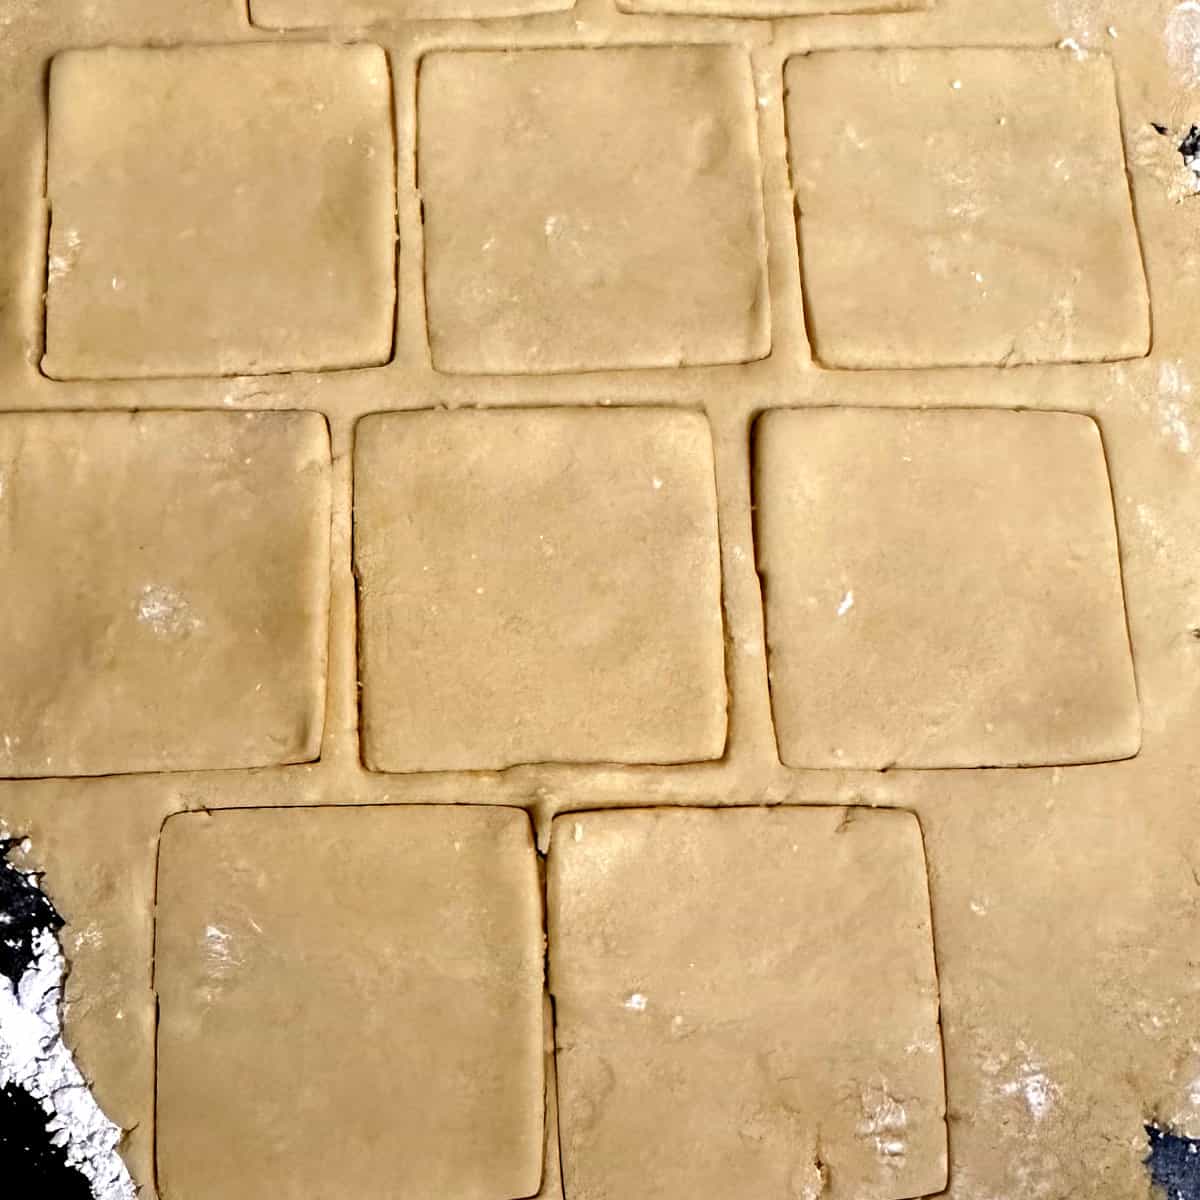 Cookies cut out in squares from vegan lemon shortbread dough.